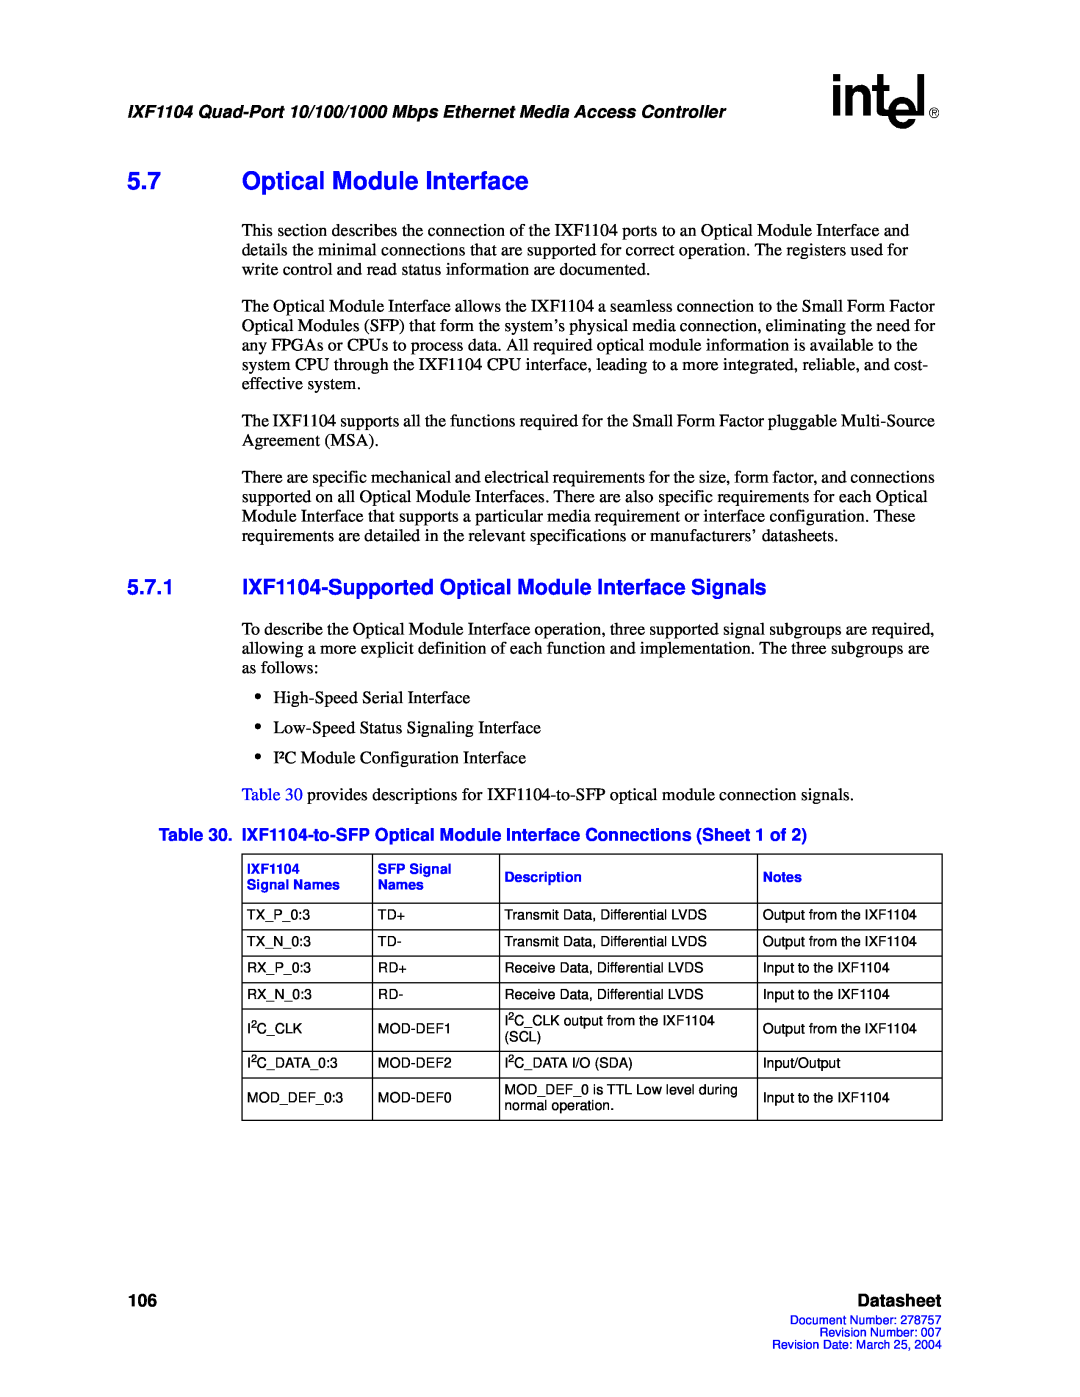 Intel IXF1104 manual 5.7Optical Module Interface, Datasheet 